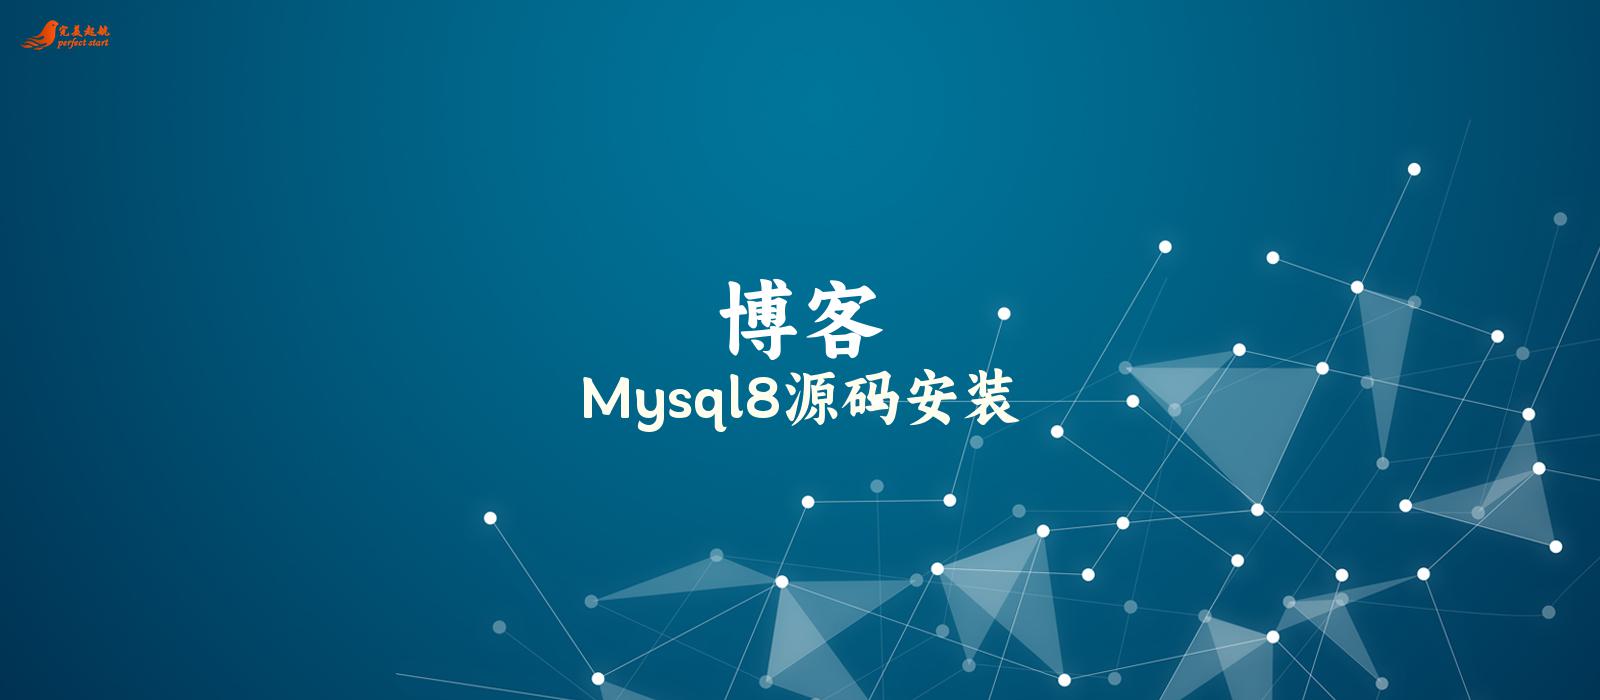 Mysql8源码安装